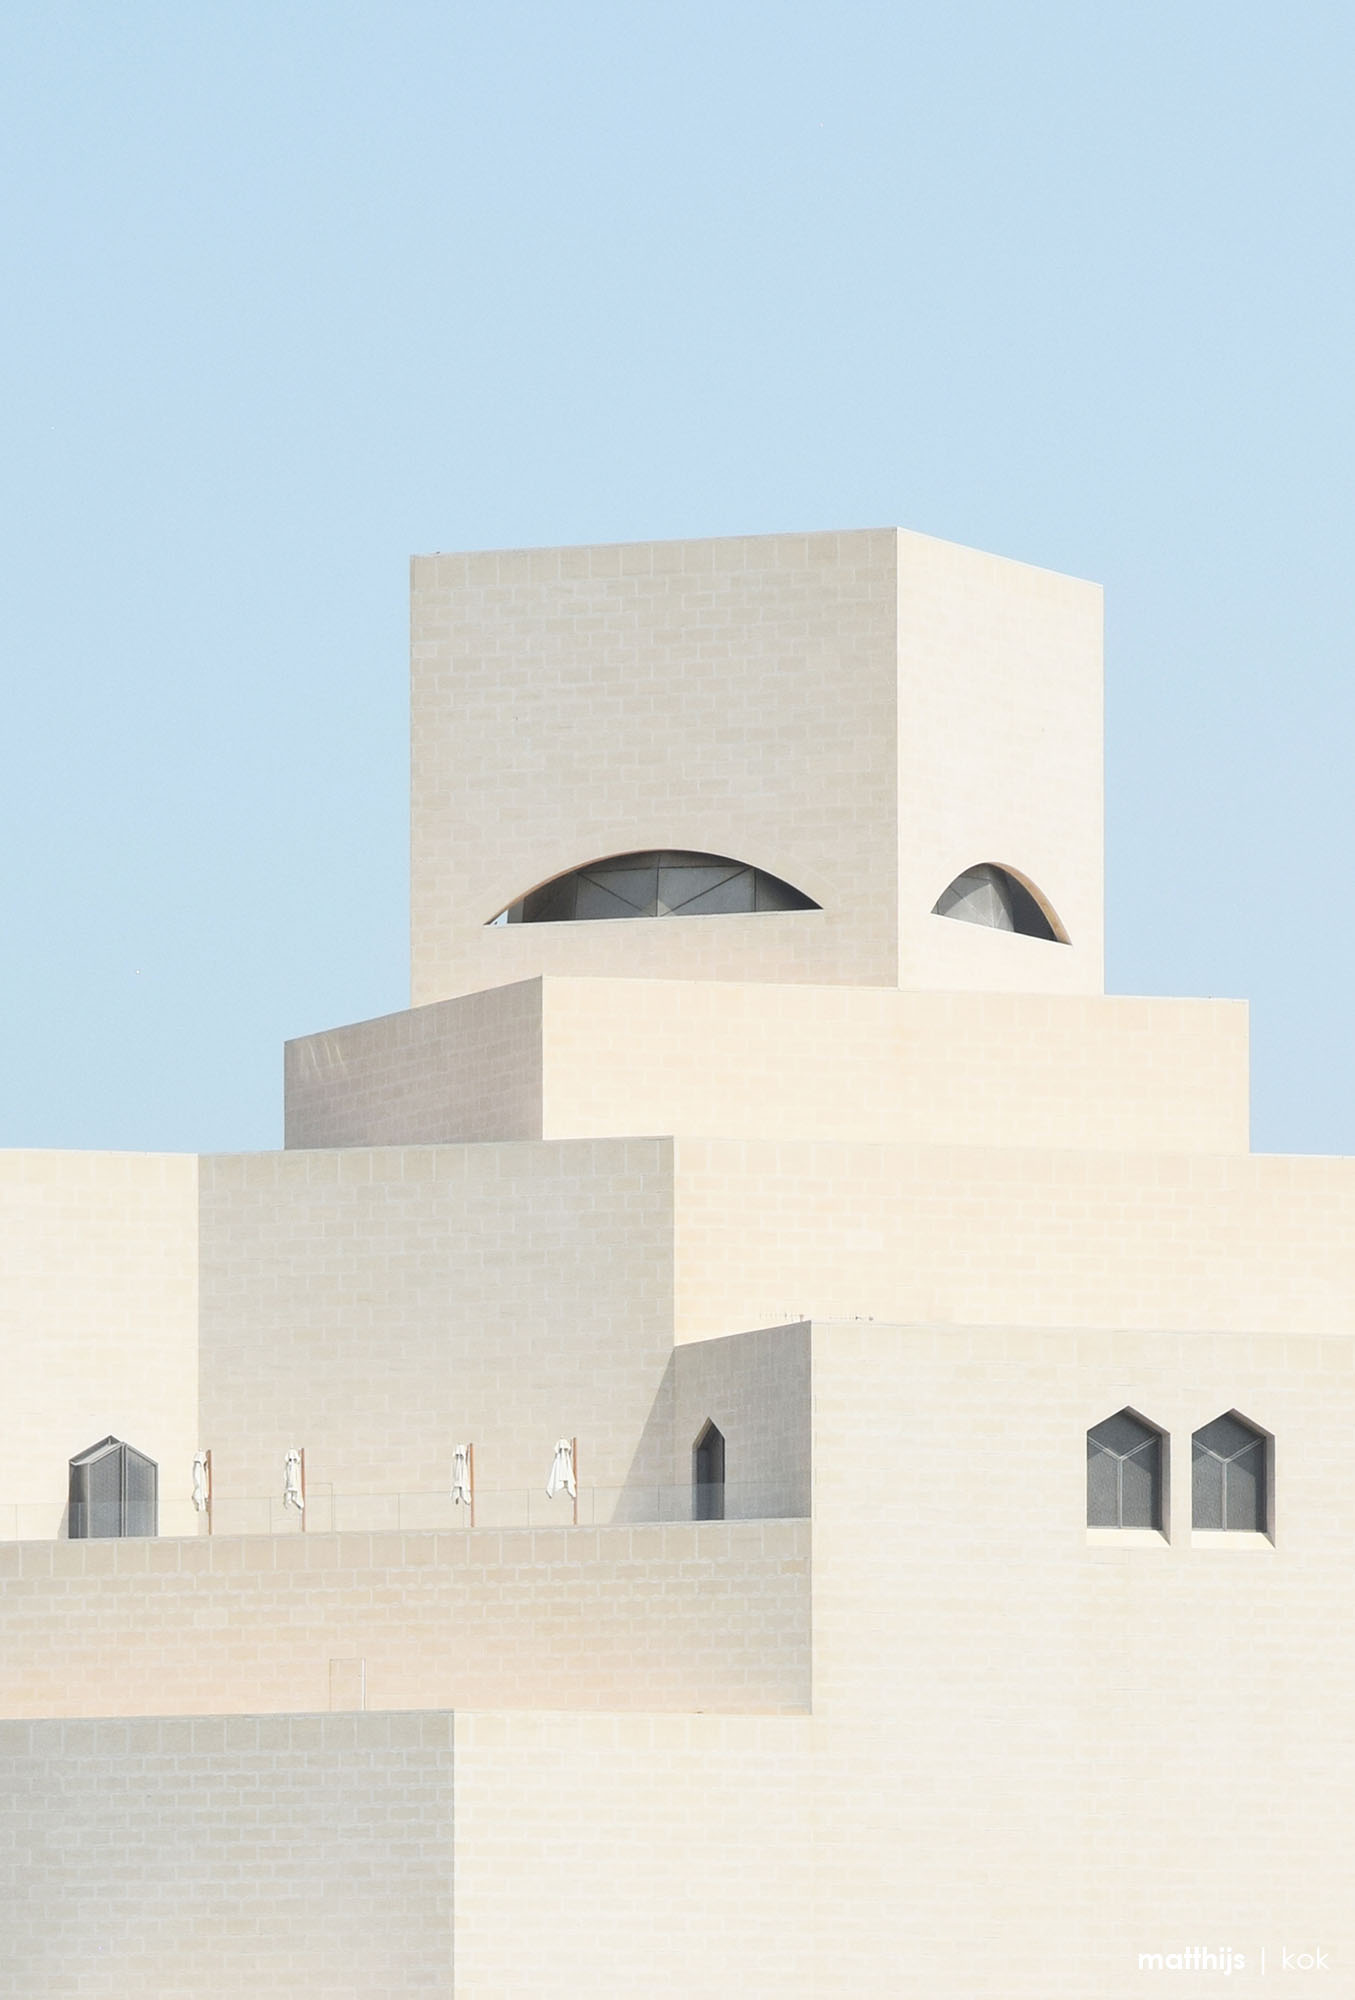 MIA Museum of Islamic Art, Doha, Qatar | Photo by Matthijs Kok